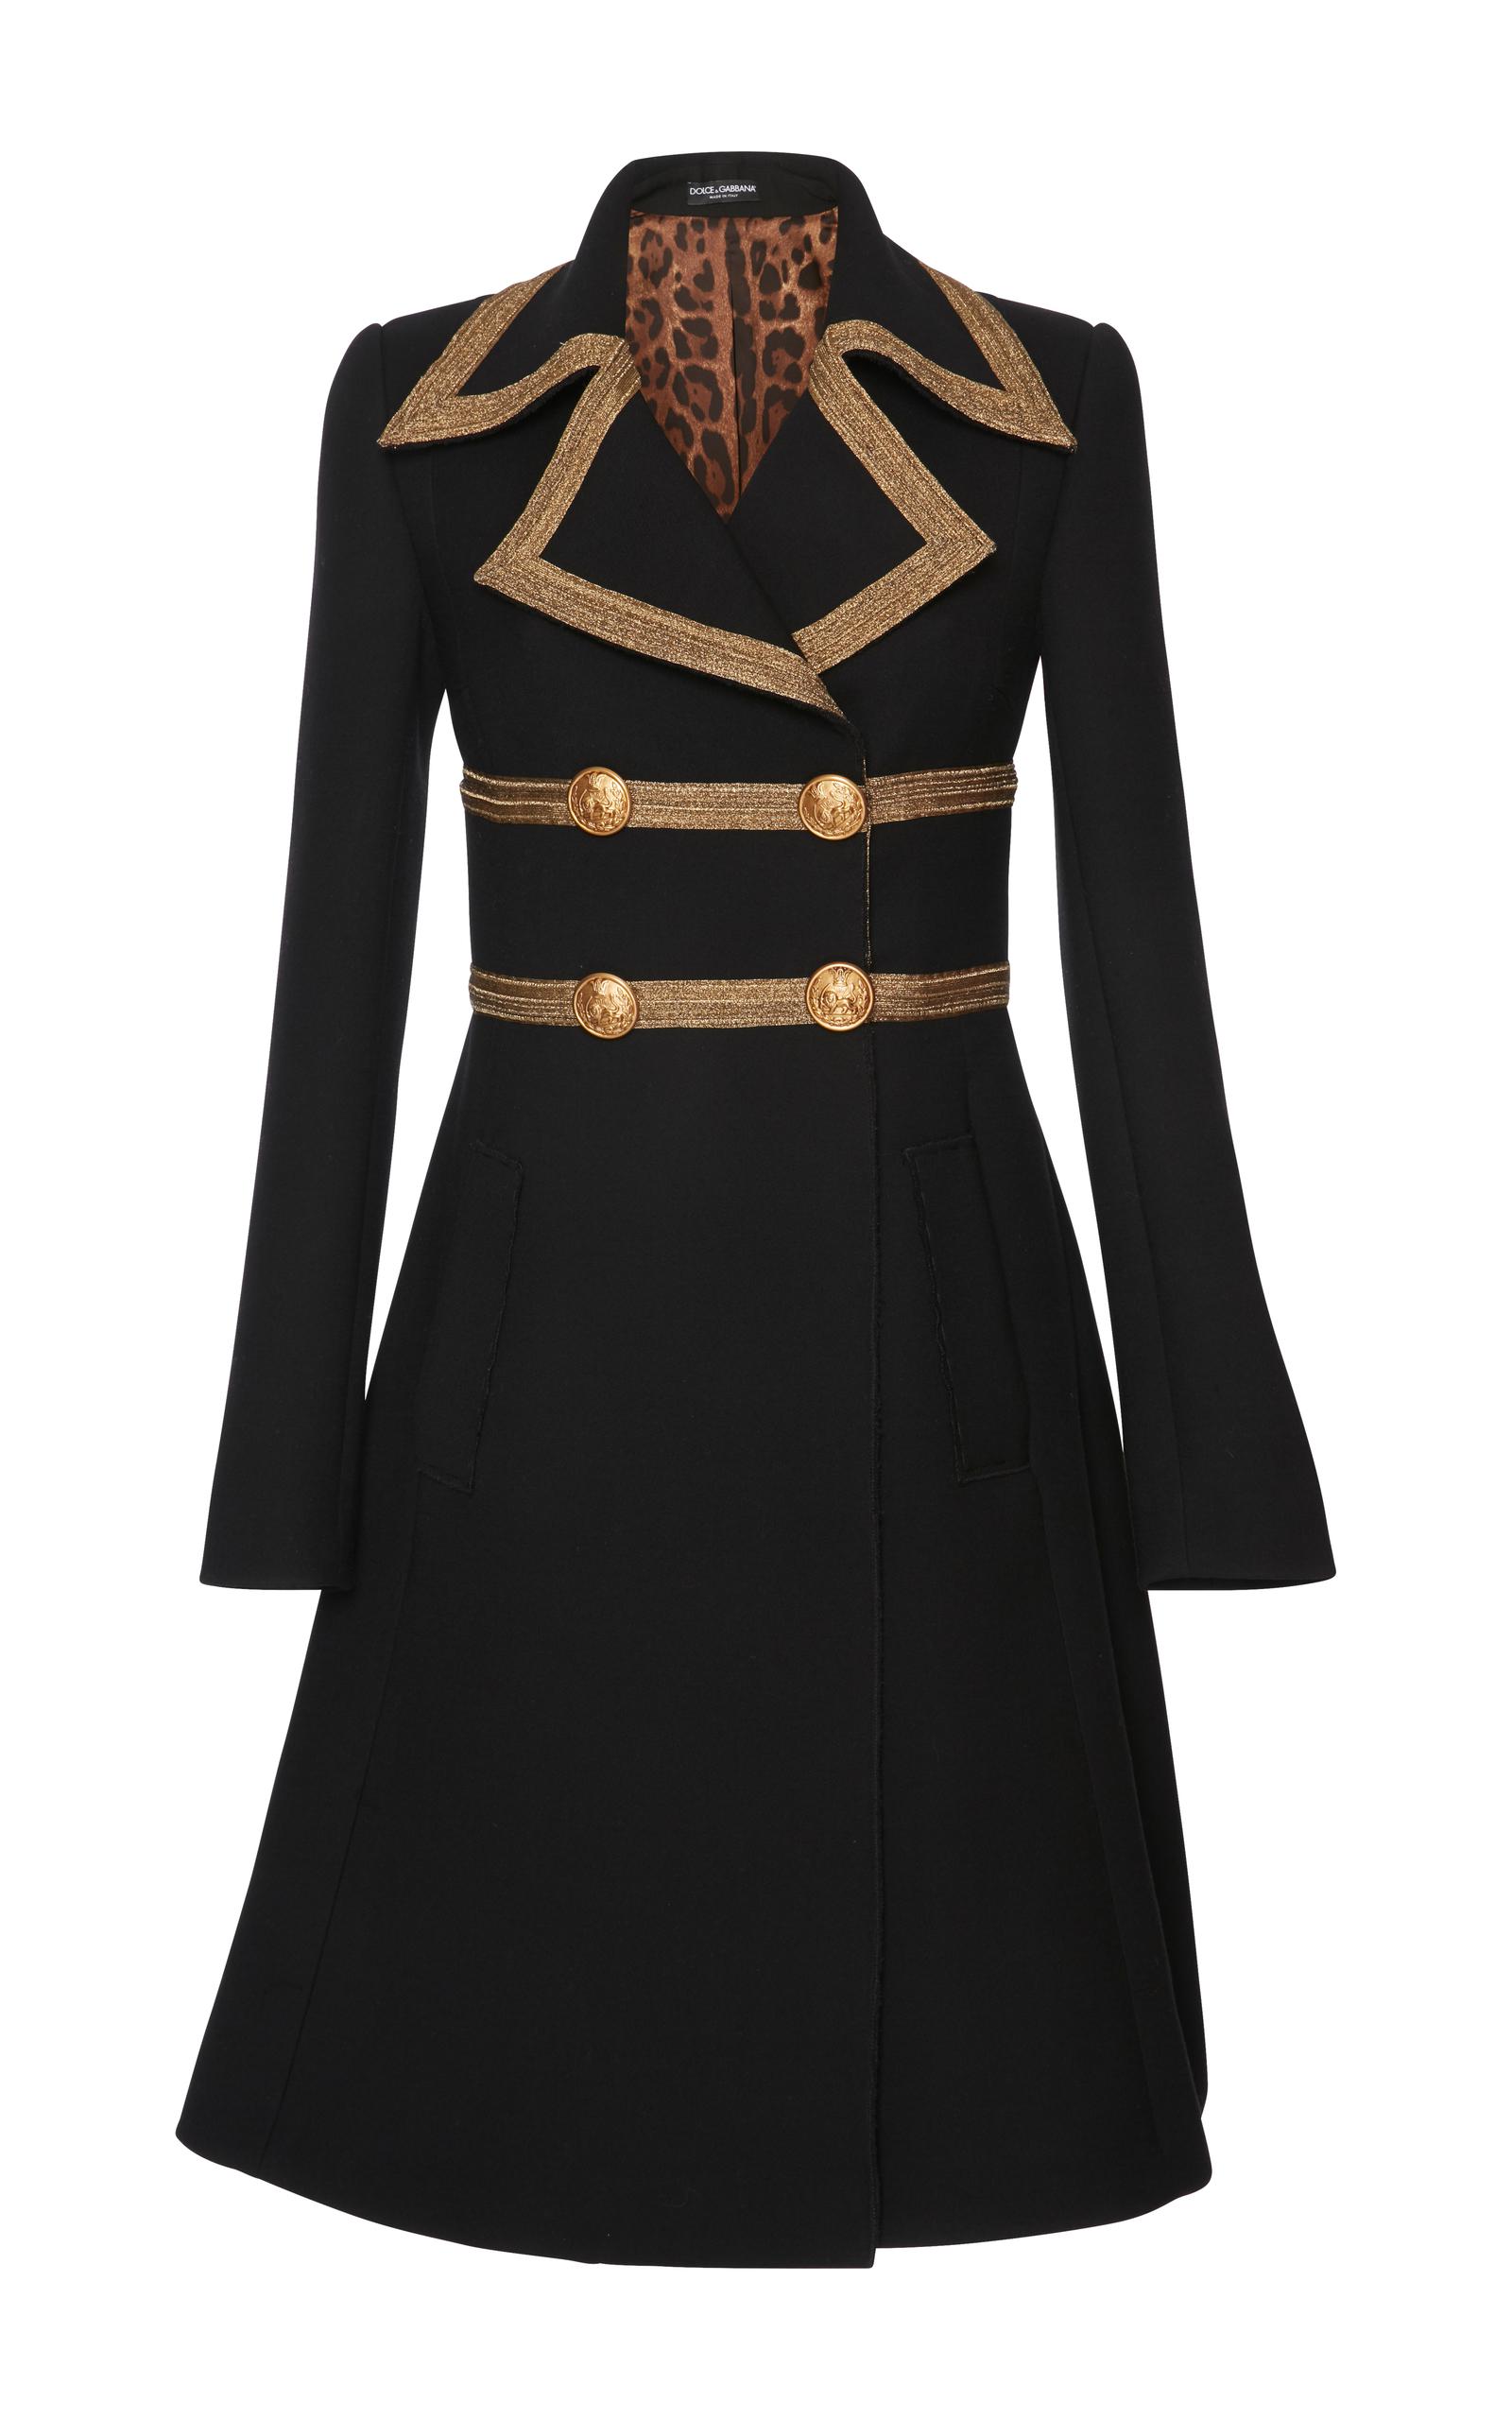 Dolce & Gabbana Wool Military Coat in Black - Lyst